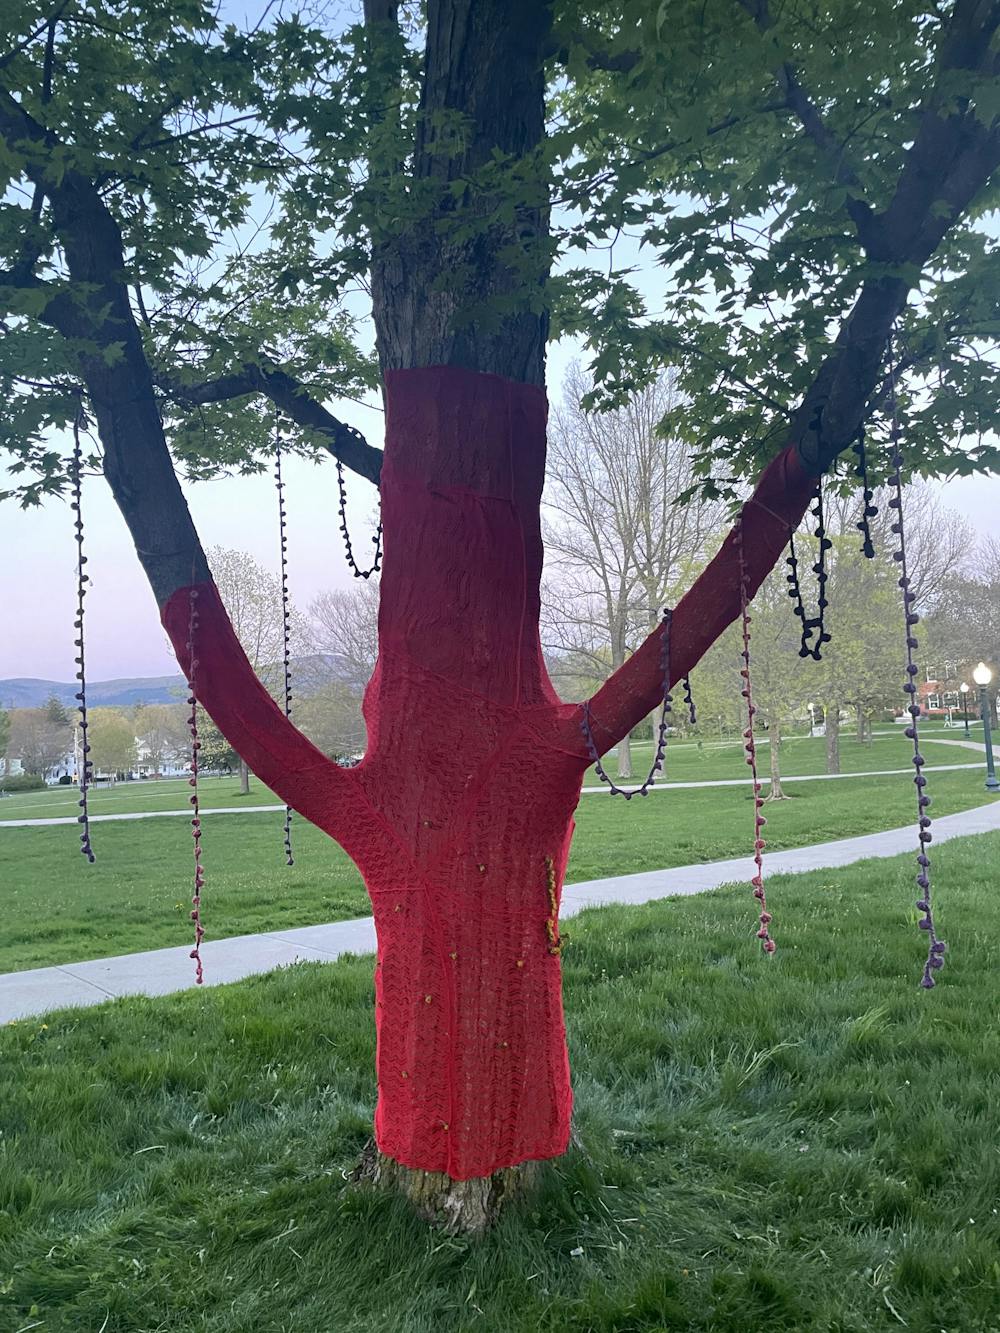 "Sweater Tree"